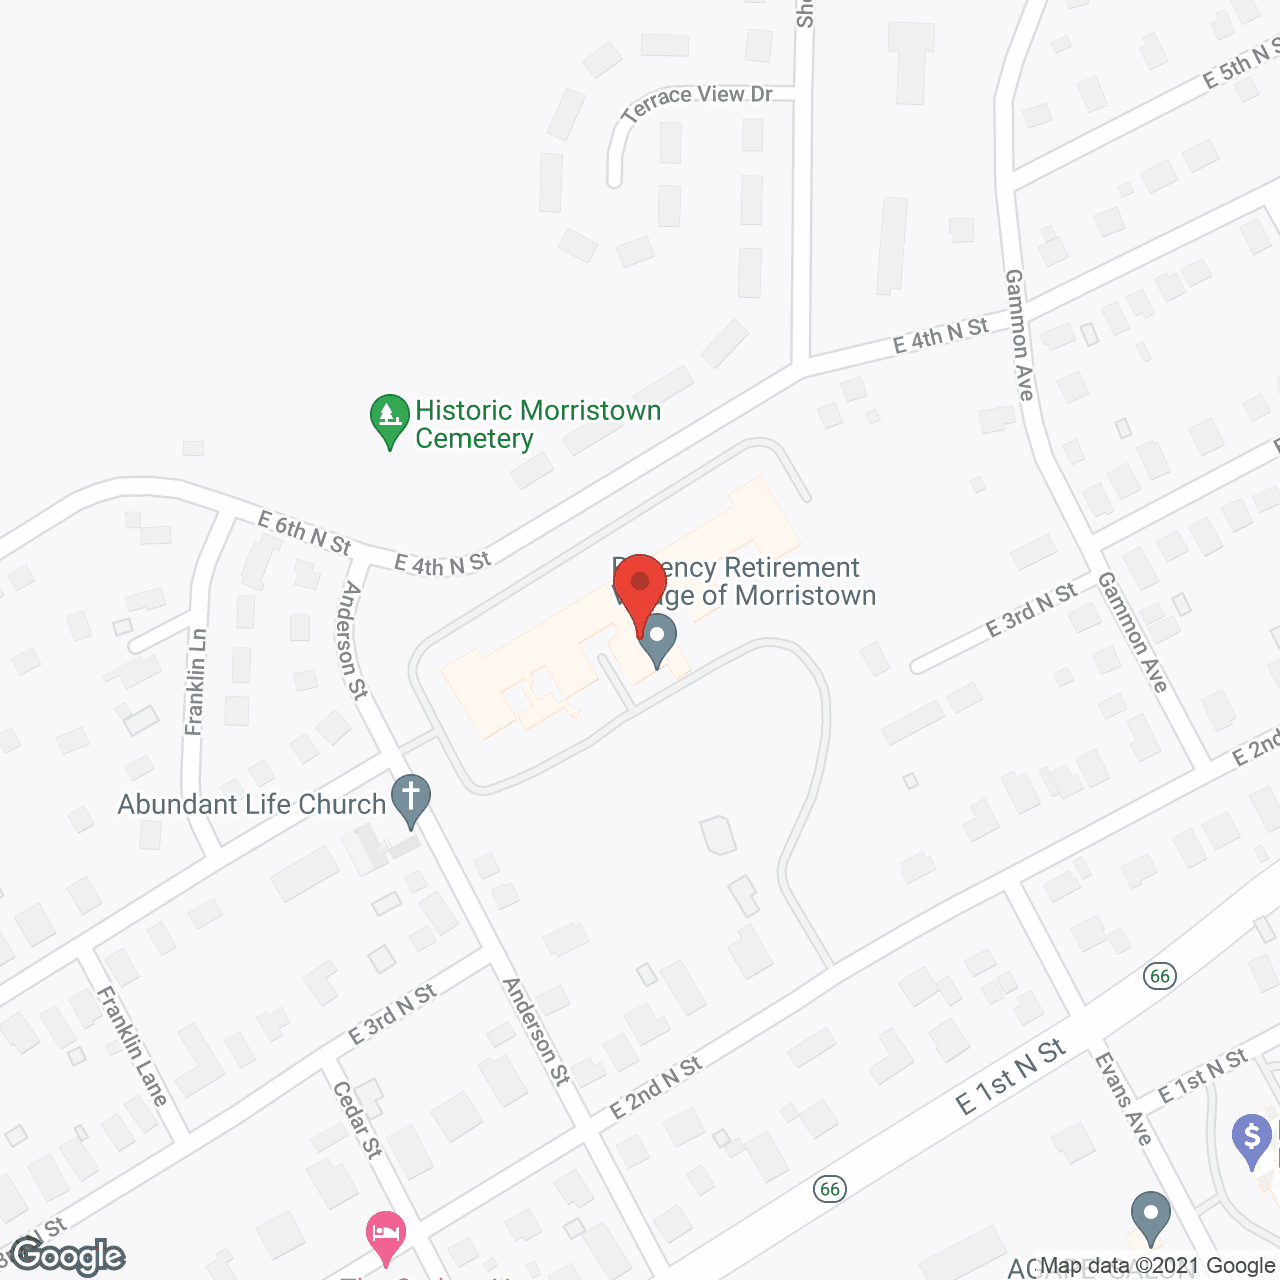 Regency Retirement Village - Morristown in google map